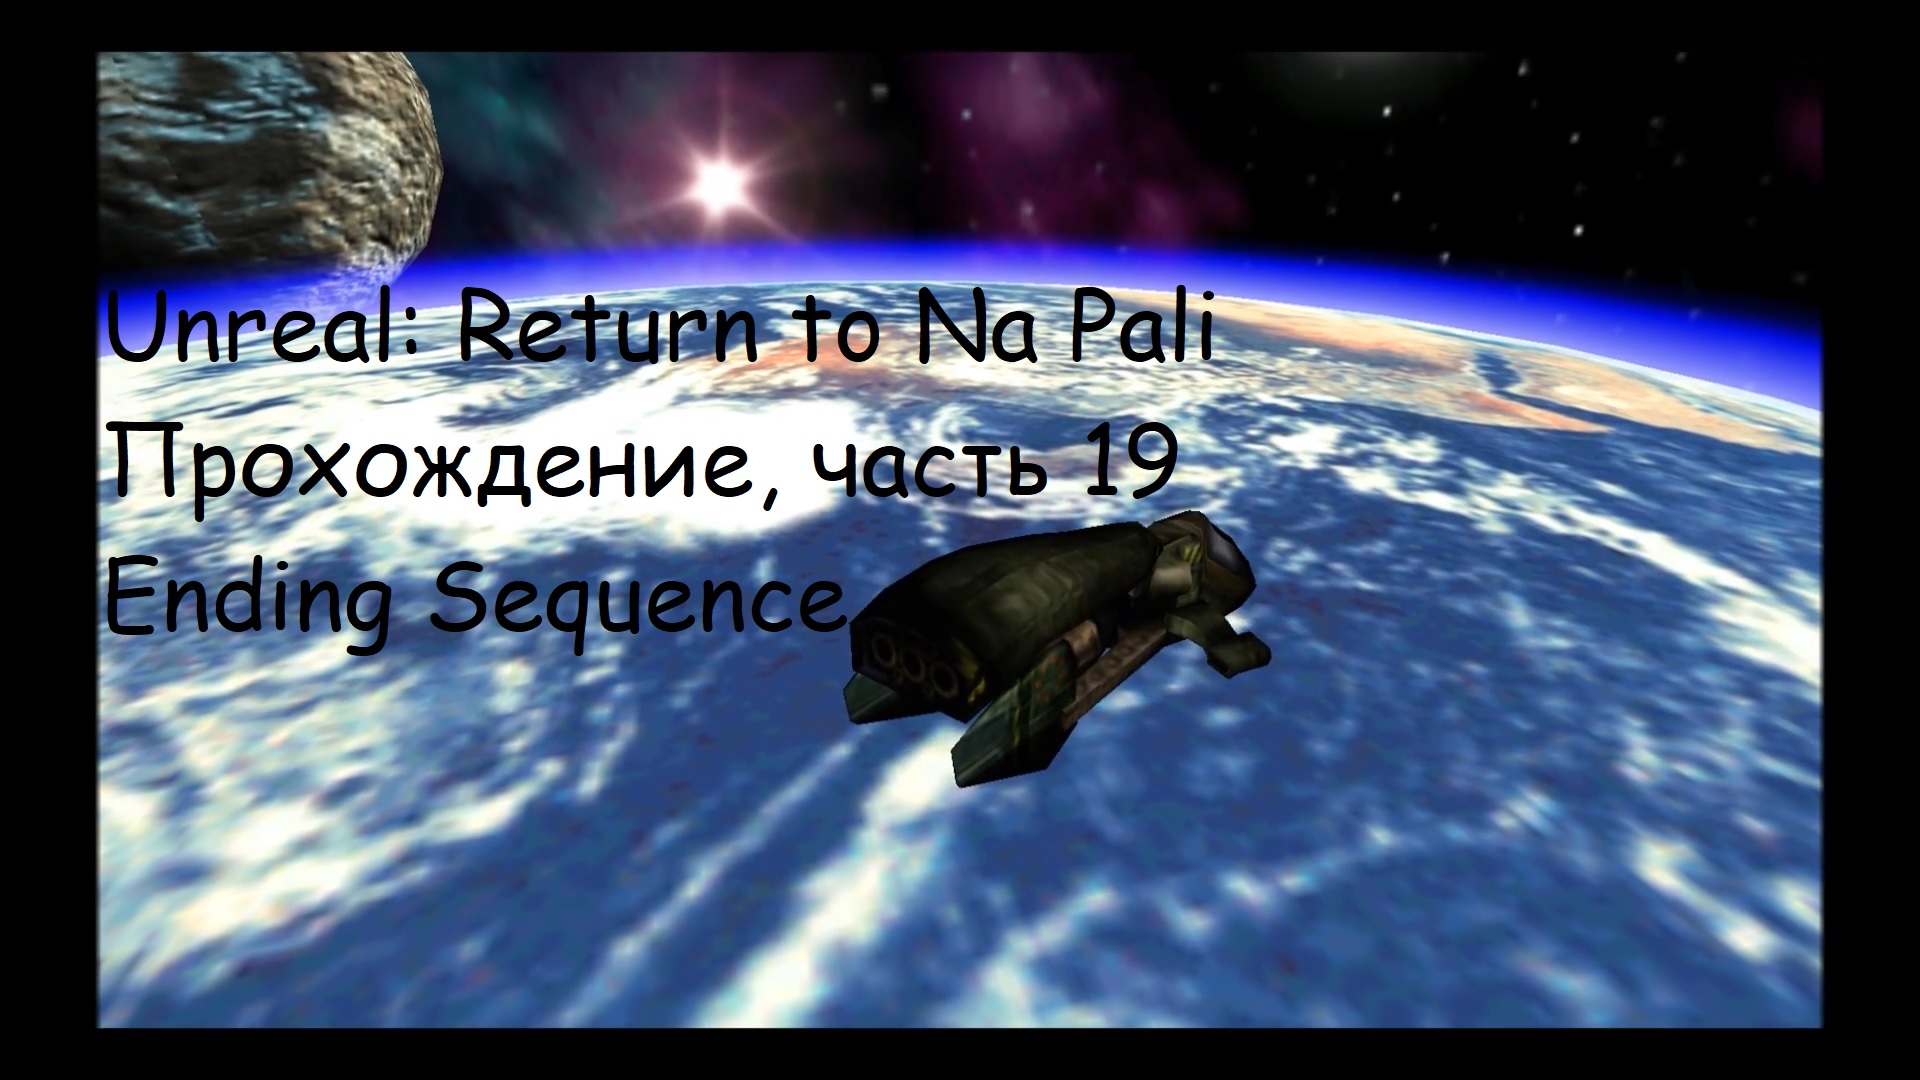 Unreal: Return to Na Pali, Прохождение, часть 19 - Ending Sequence